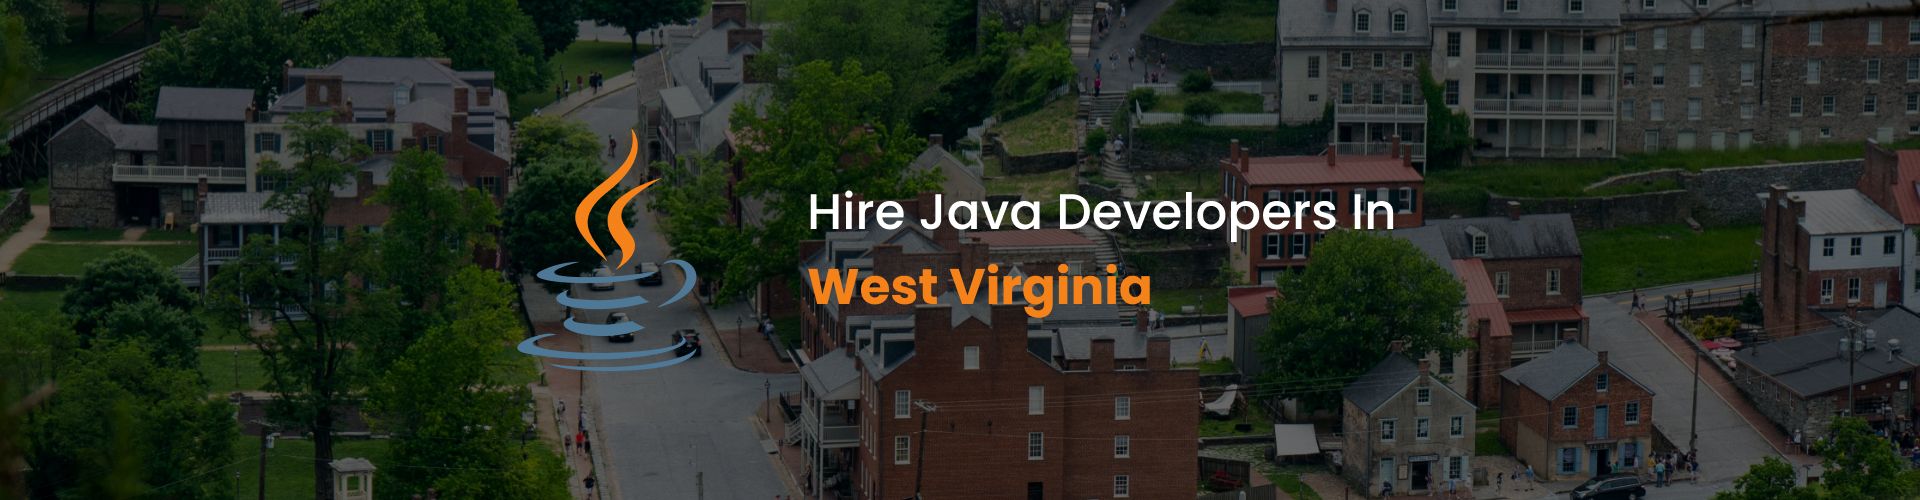 hire java developers in west virginia